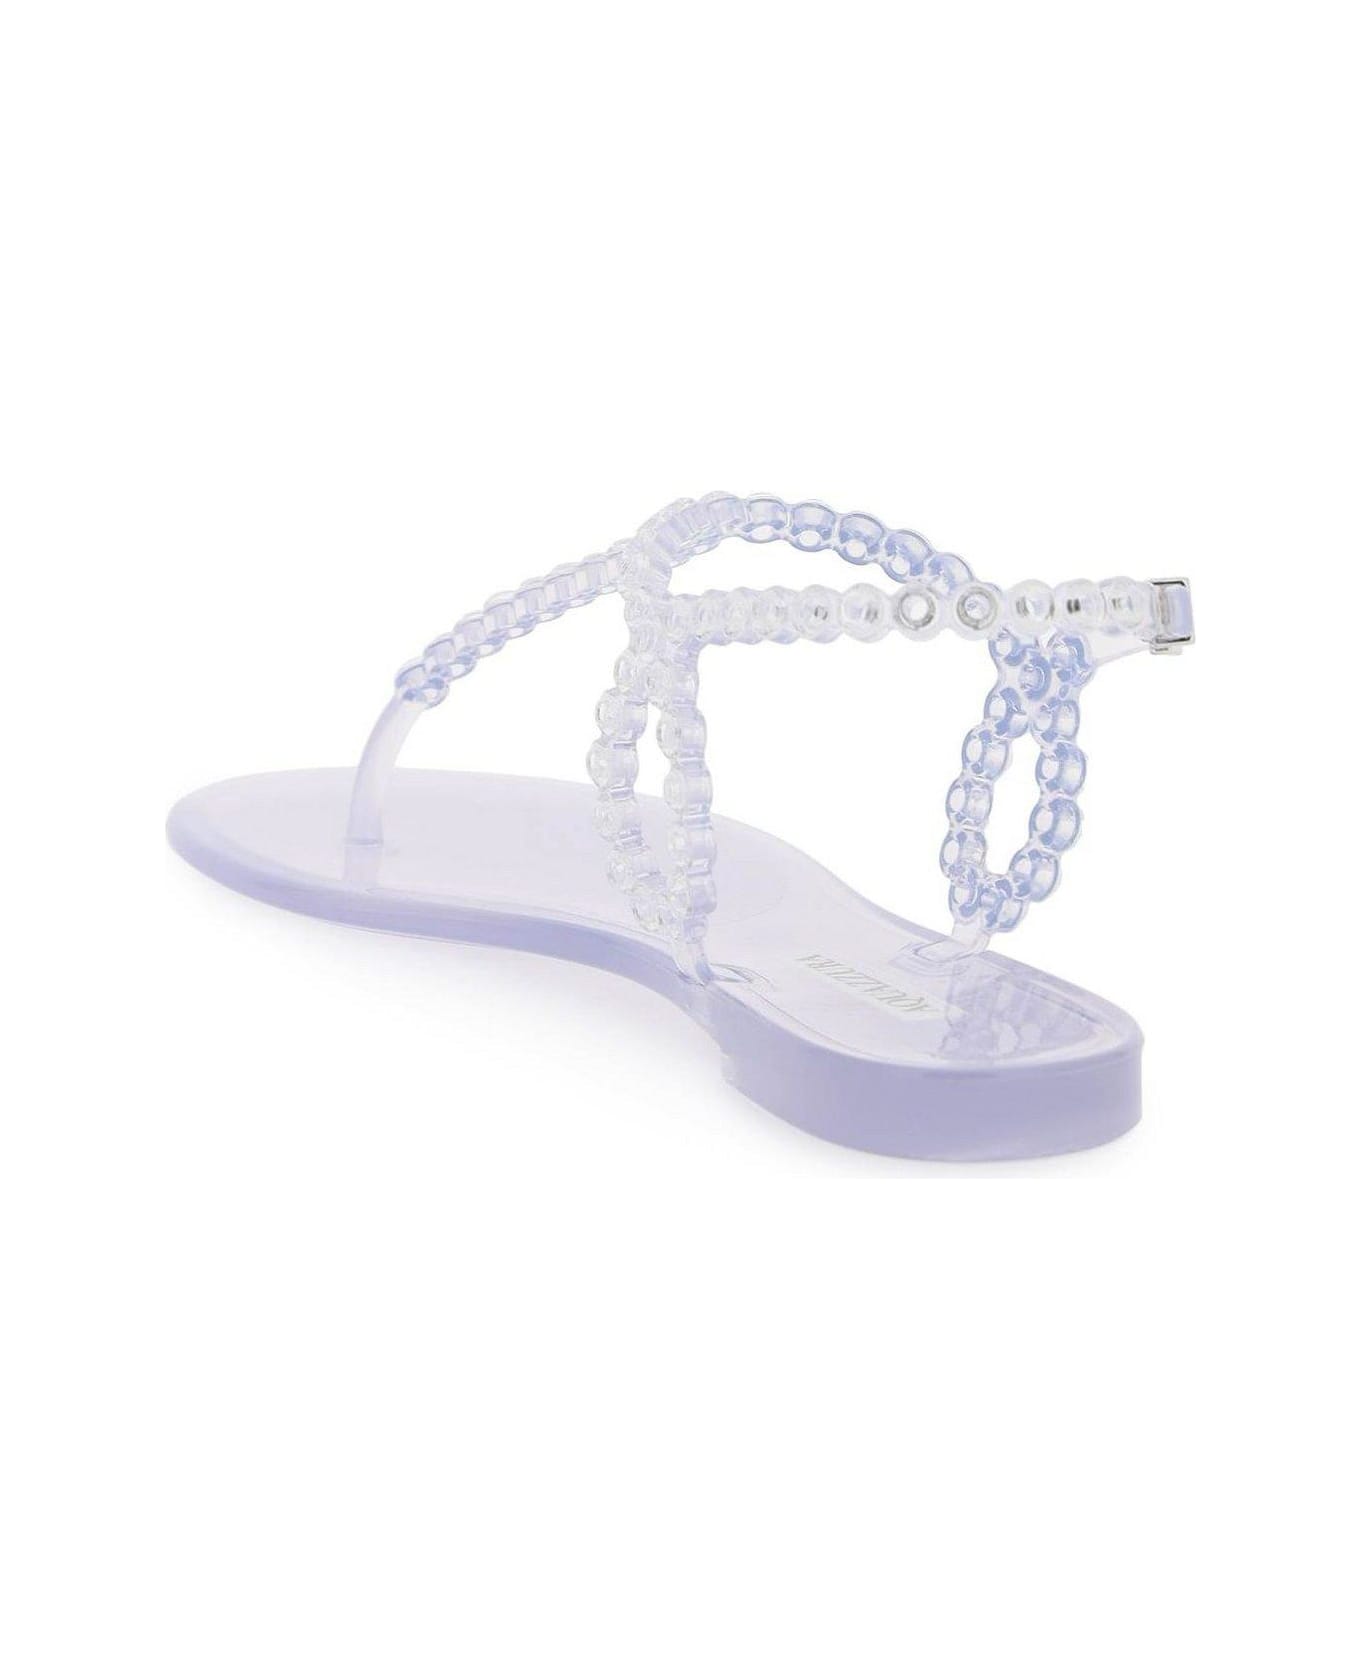 Aquazzura Almost Bare Embellished Jelly Flat Sandals - Argento